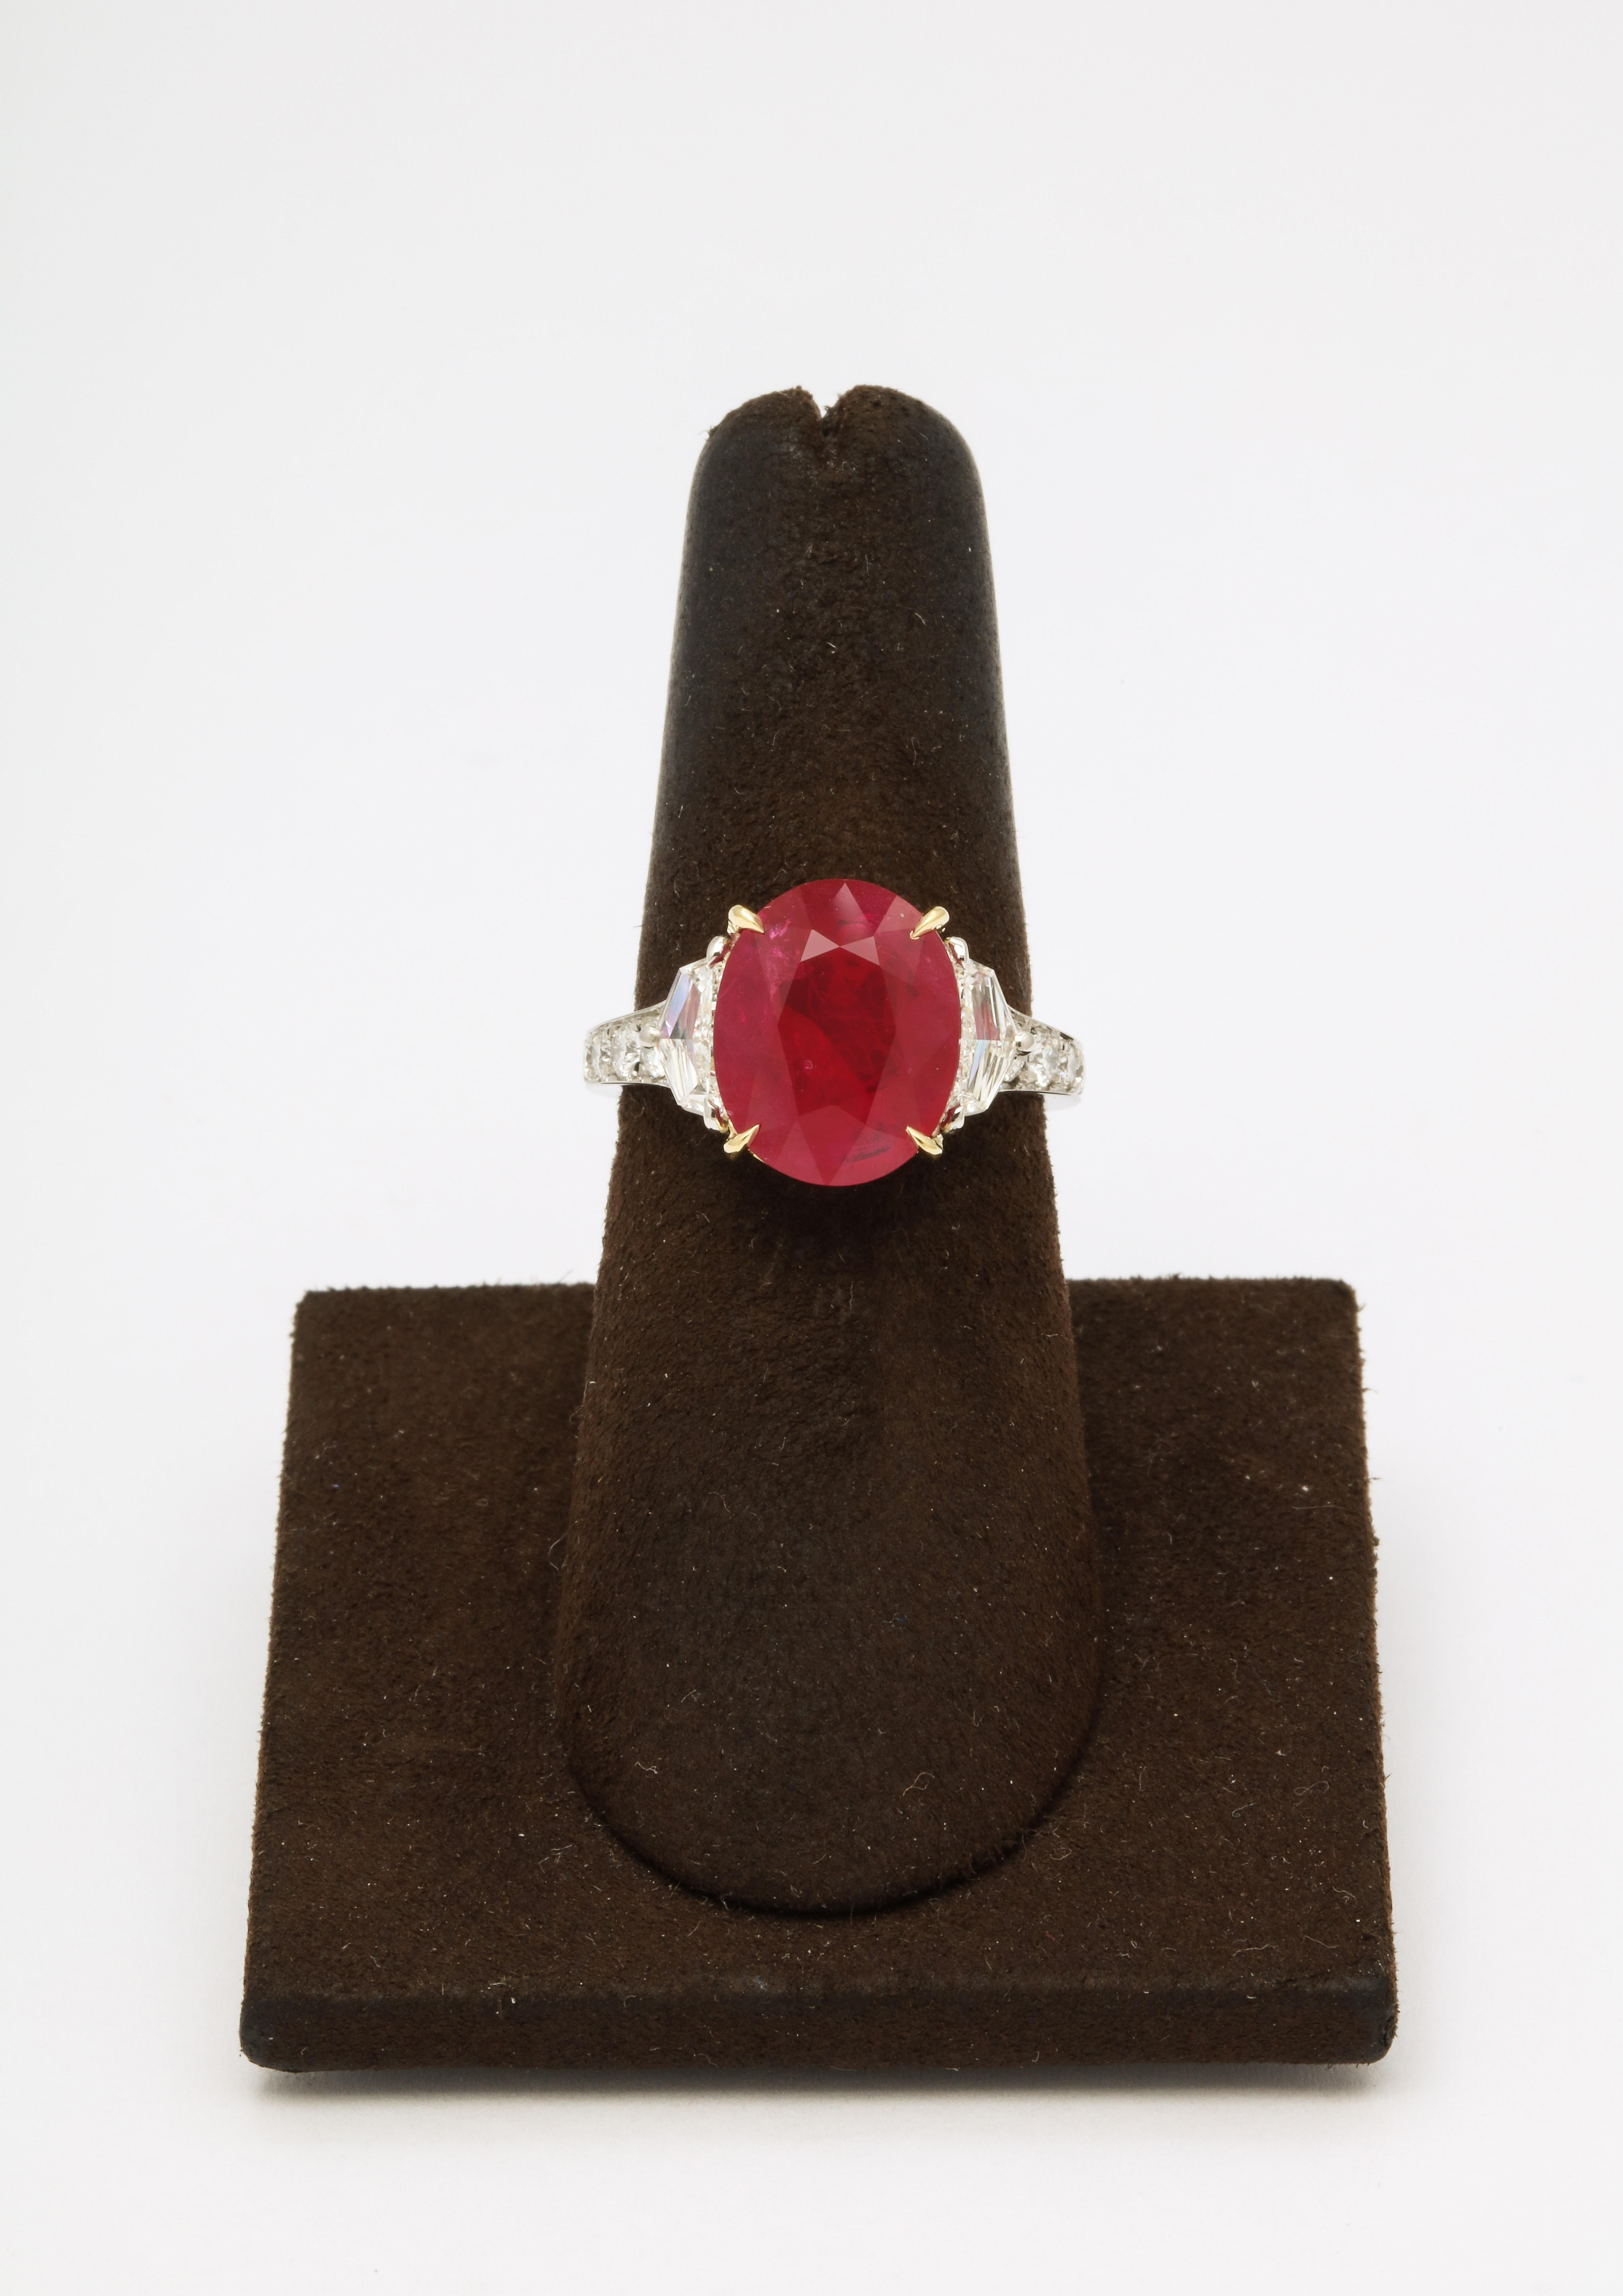 
A beautiful Burma ruby set in a stunning custom diamond mounting. 

Certified 5.33 carat 